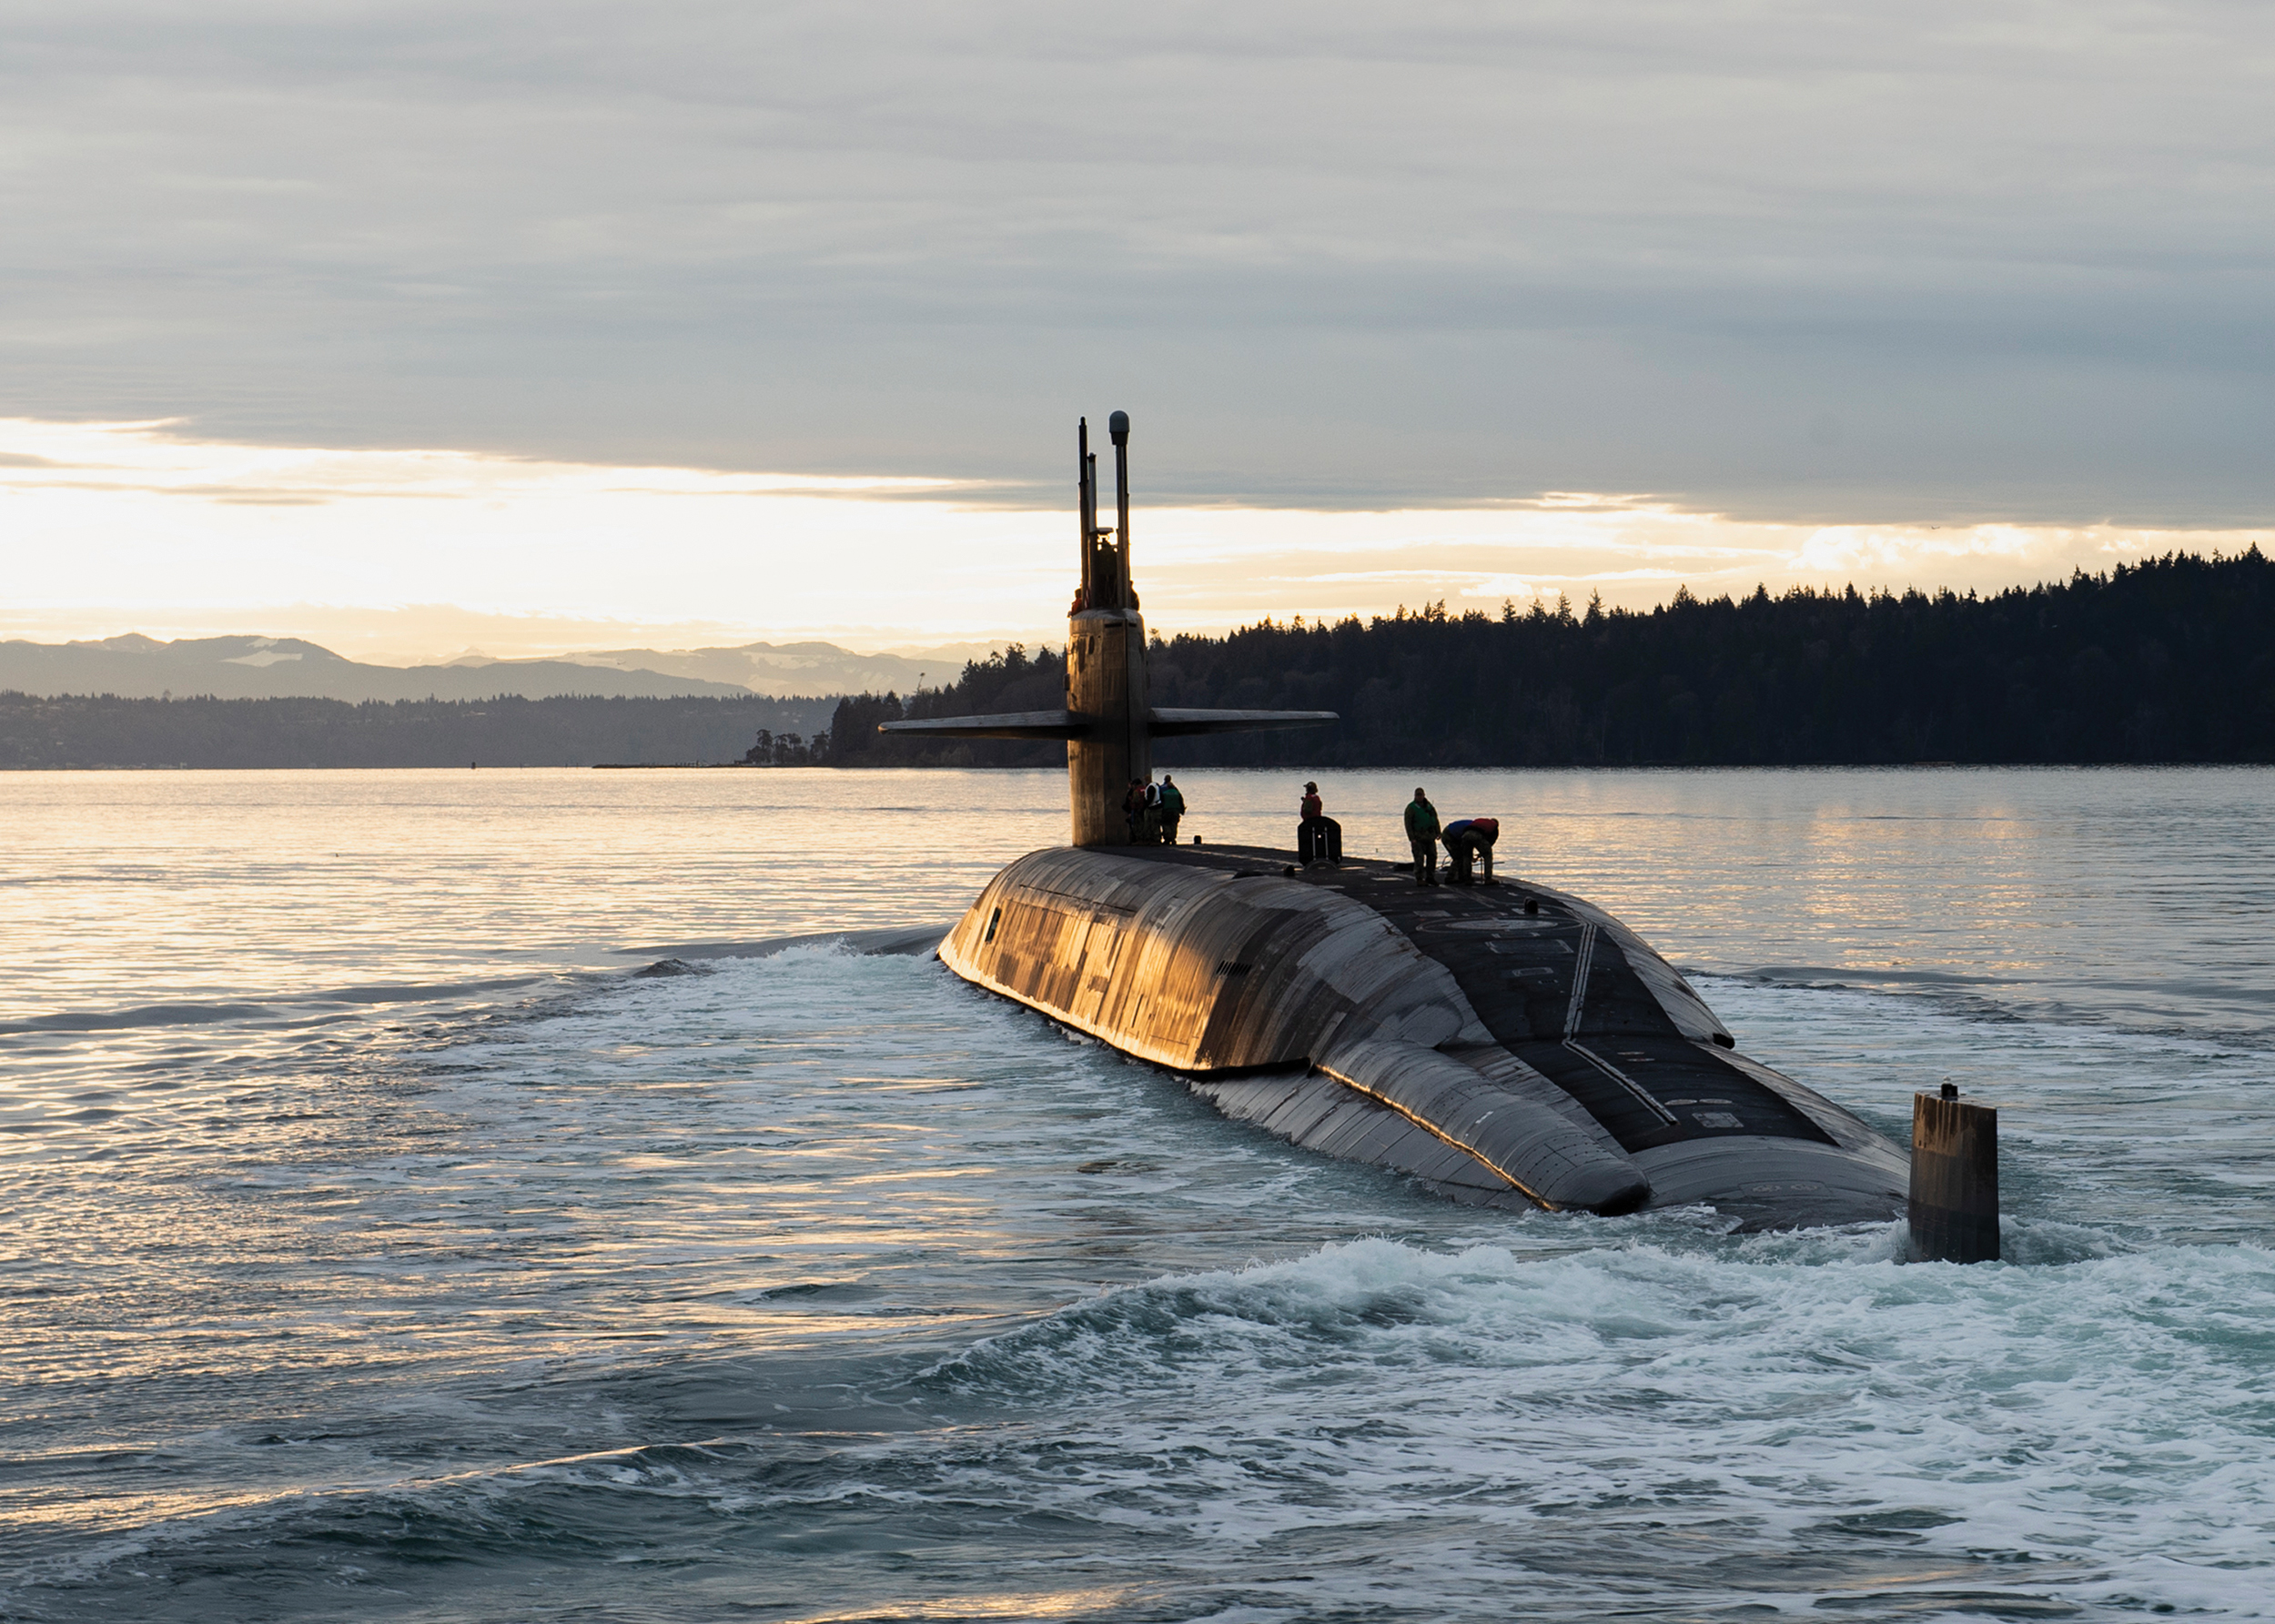 Ohio-class ballistic missile submarine transits Puget Sound